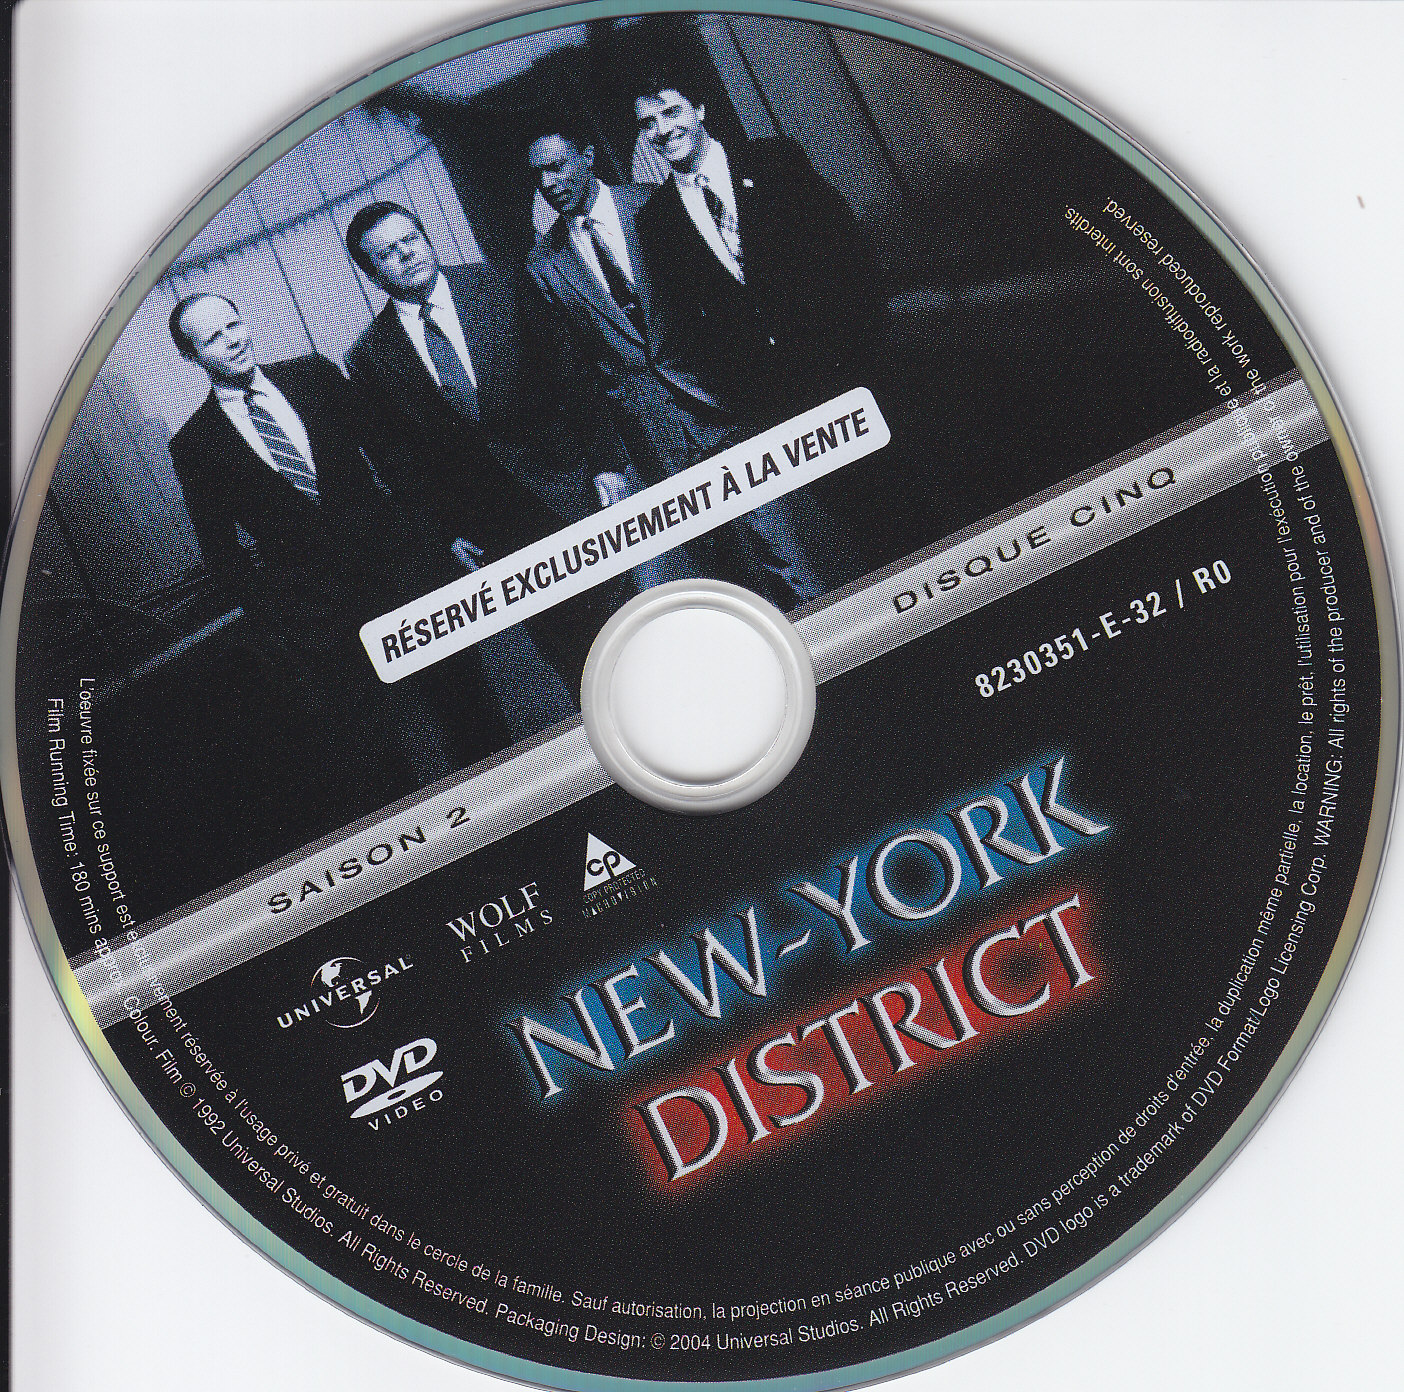 New York district Saison 2 DISC 5